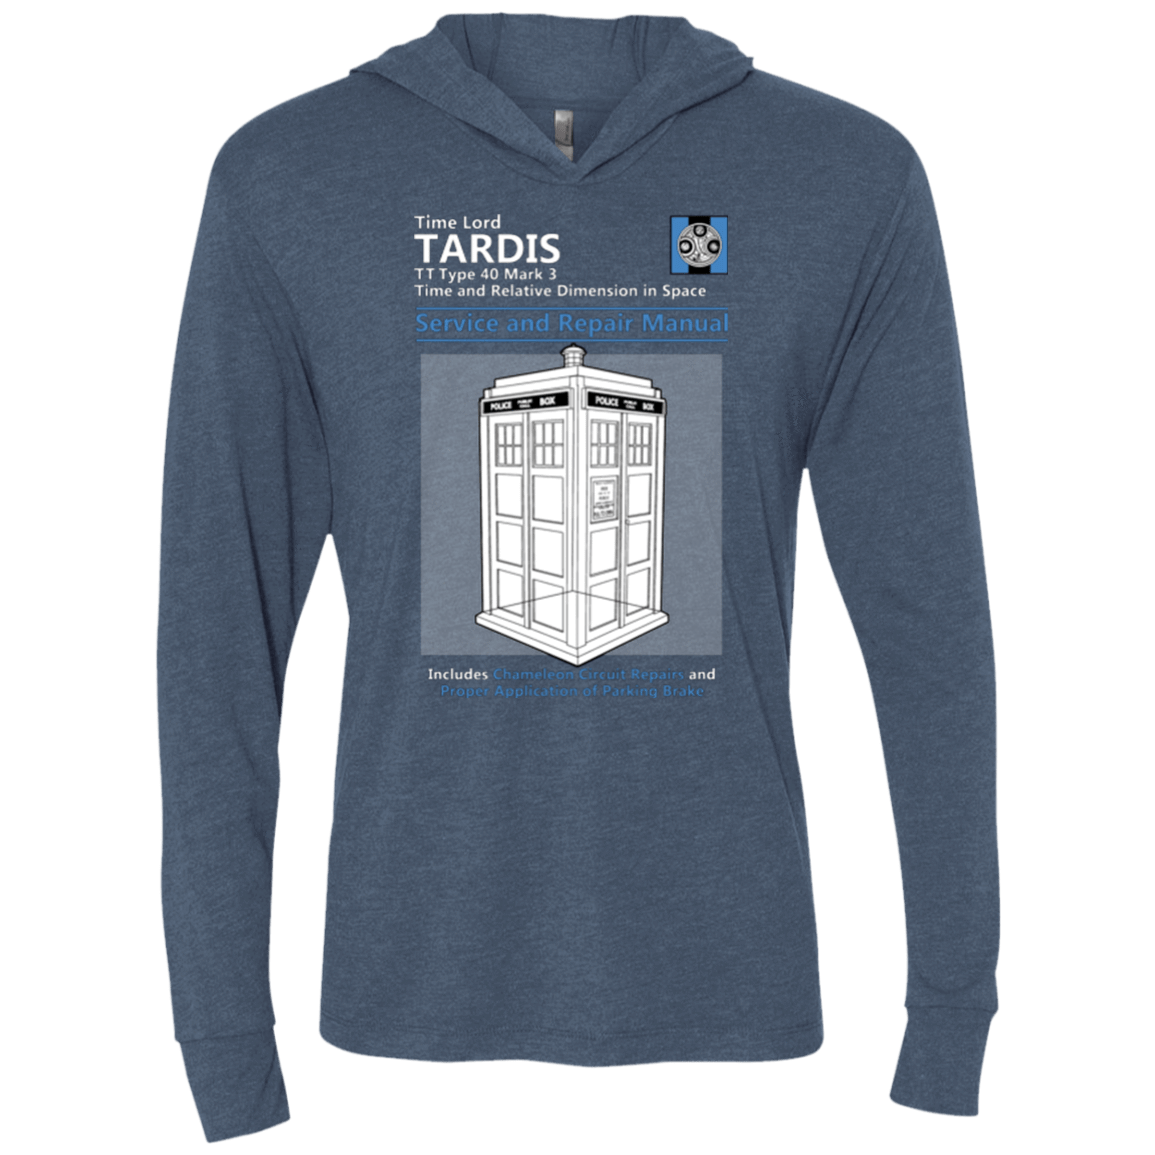 T-Shirts Indigo / X-Small TARDIS SERVICE AND REPAIR MANUAL Triblend Long Sleeve Hoodie Tee